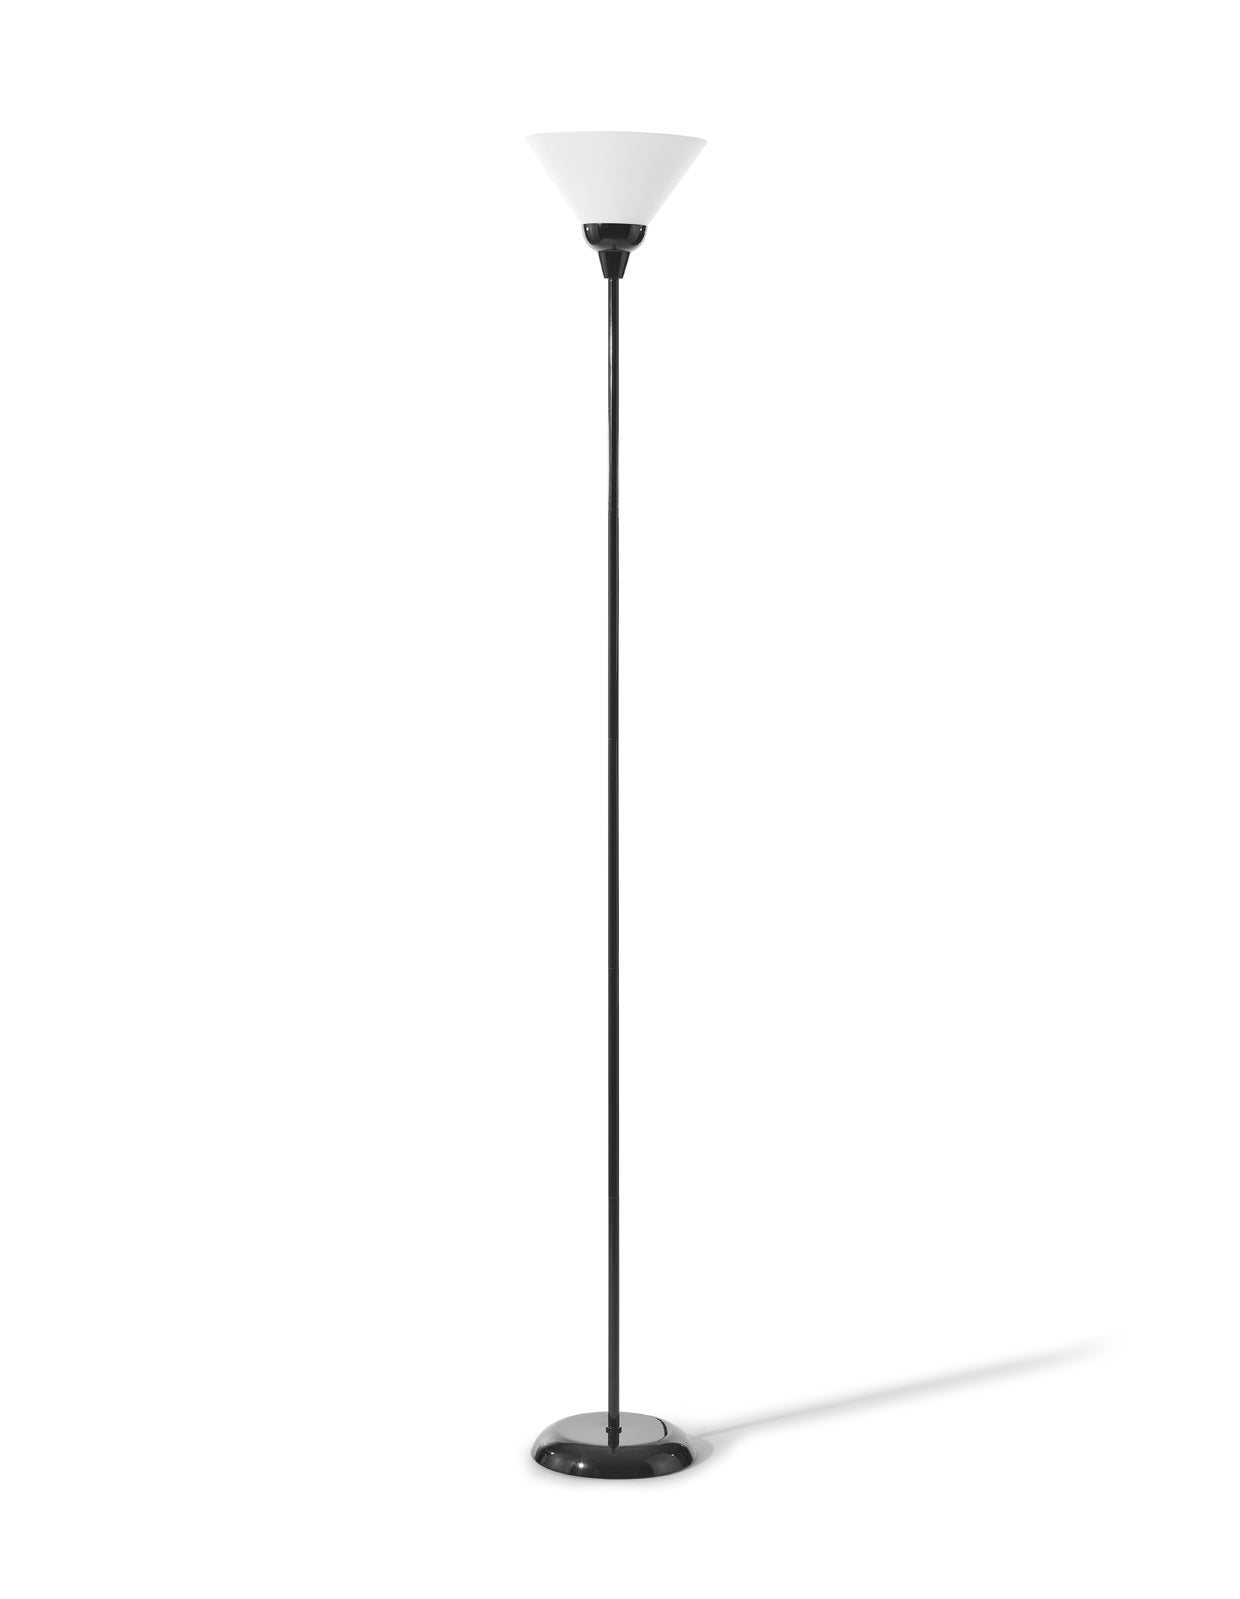 Sherwood Lighting Free Standing Uplighter Floor Lamp Black and White